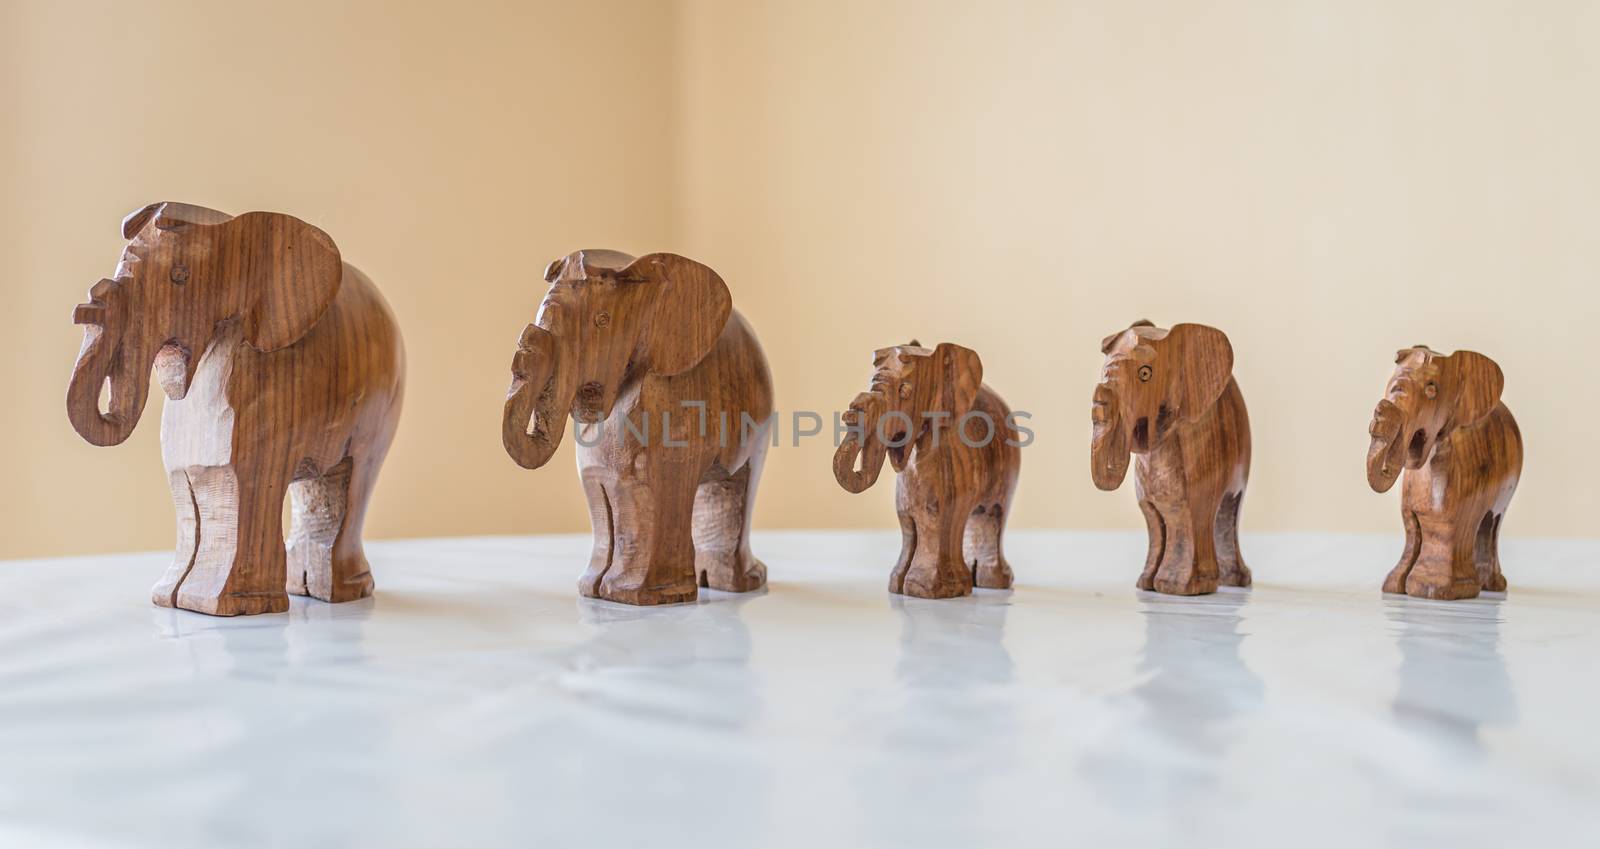 Carved wooden elephants on table by okskukuruza